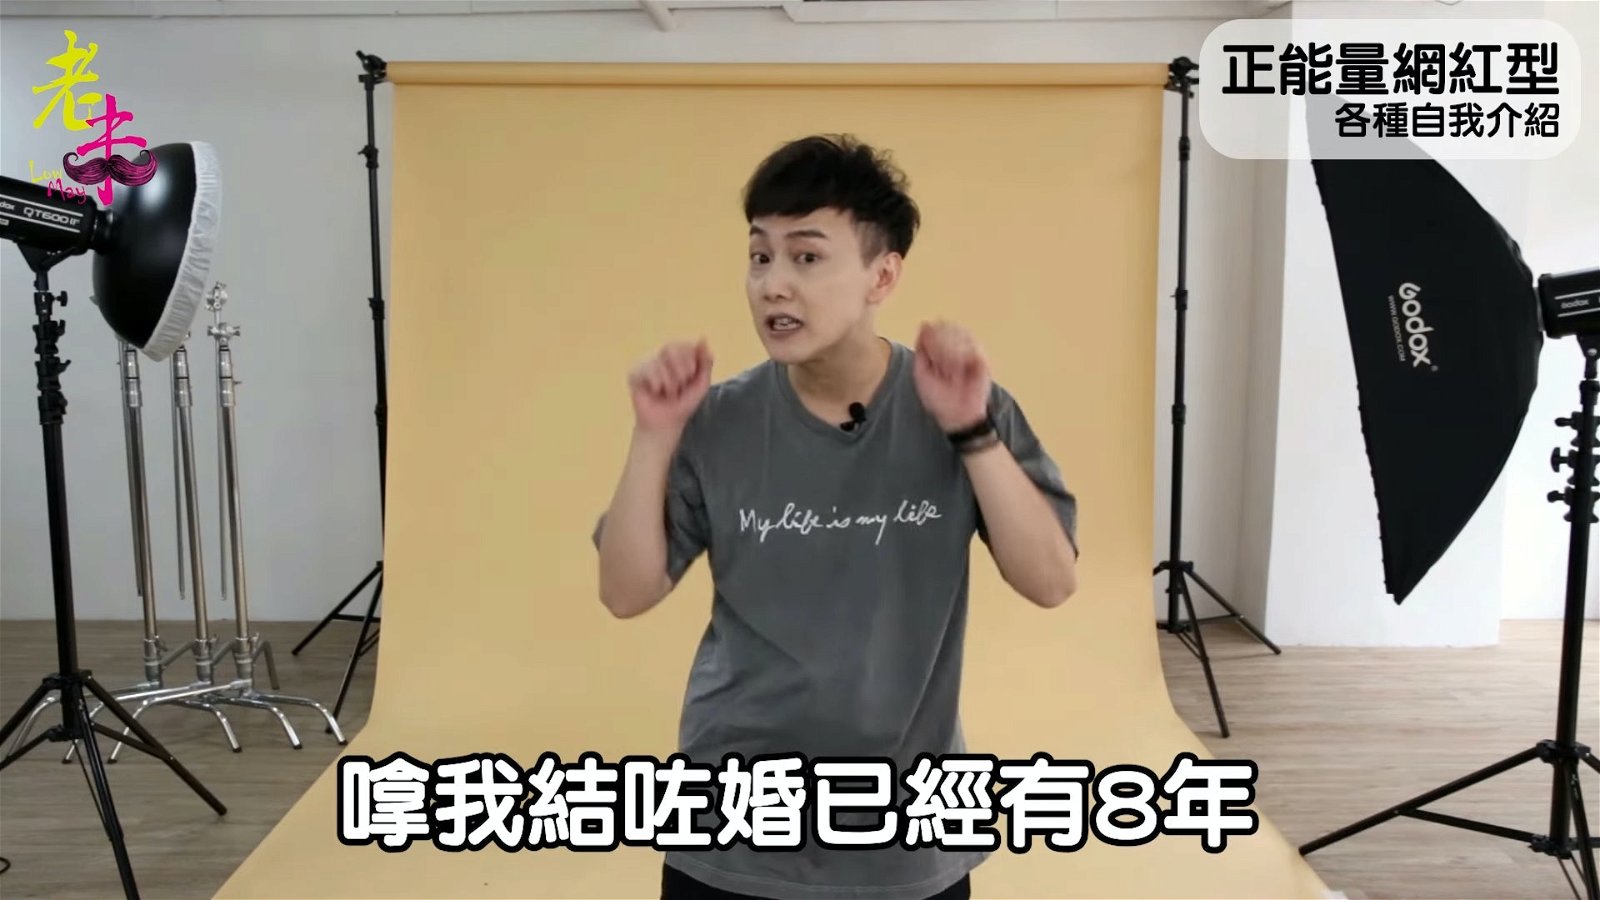 张国权开设YouTube频道。